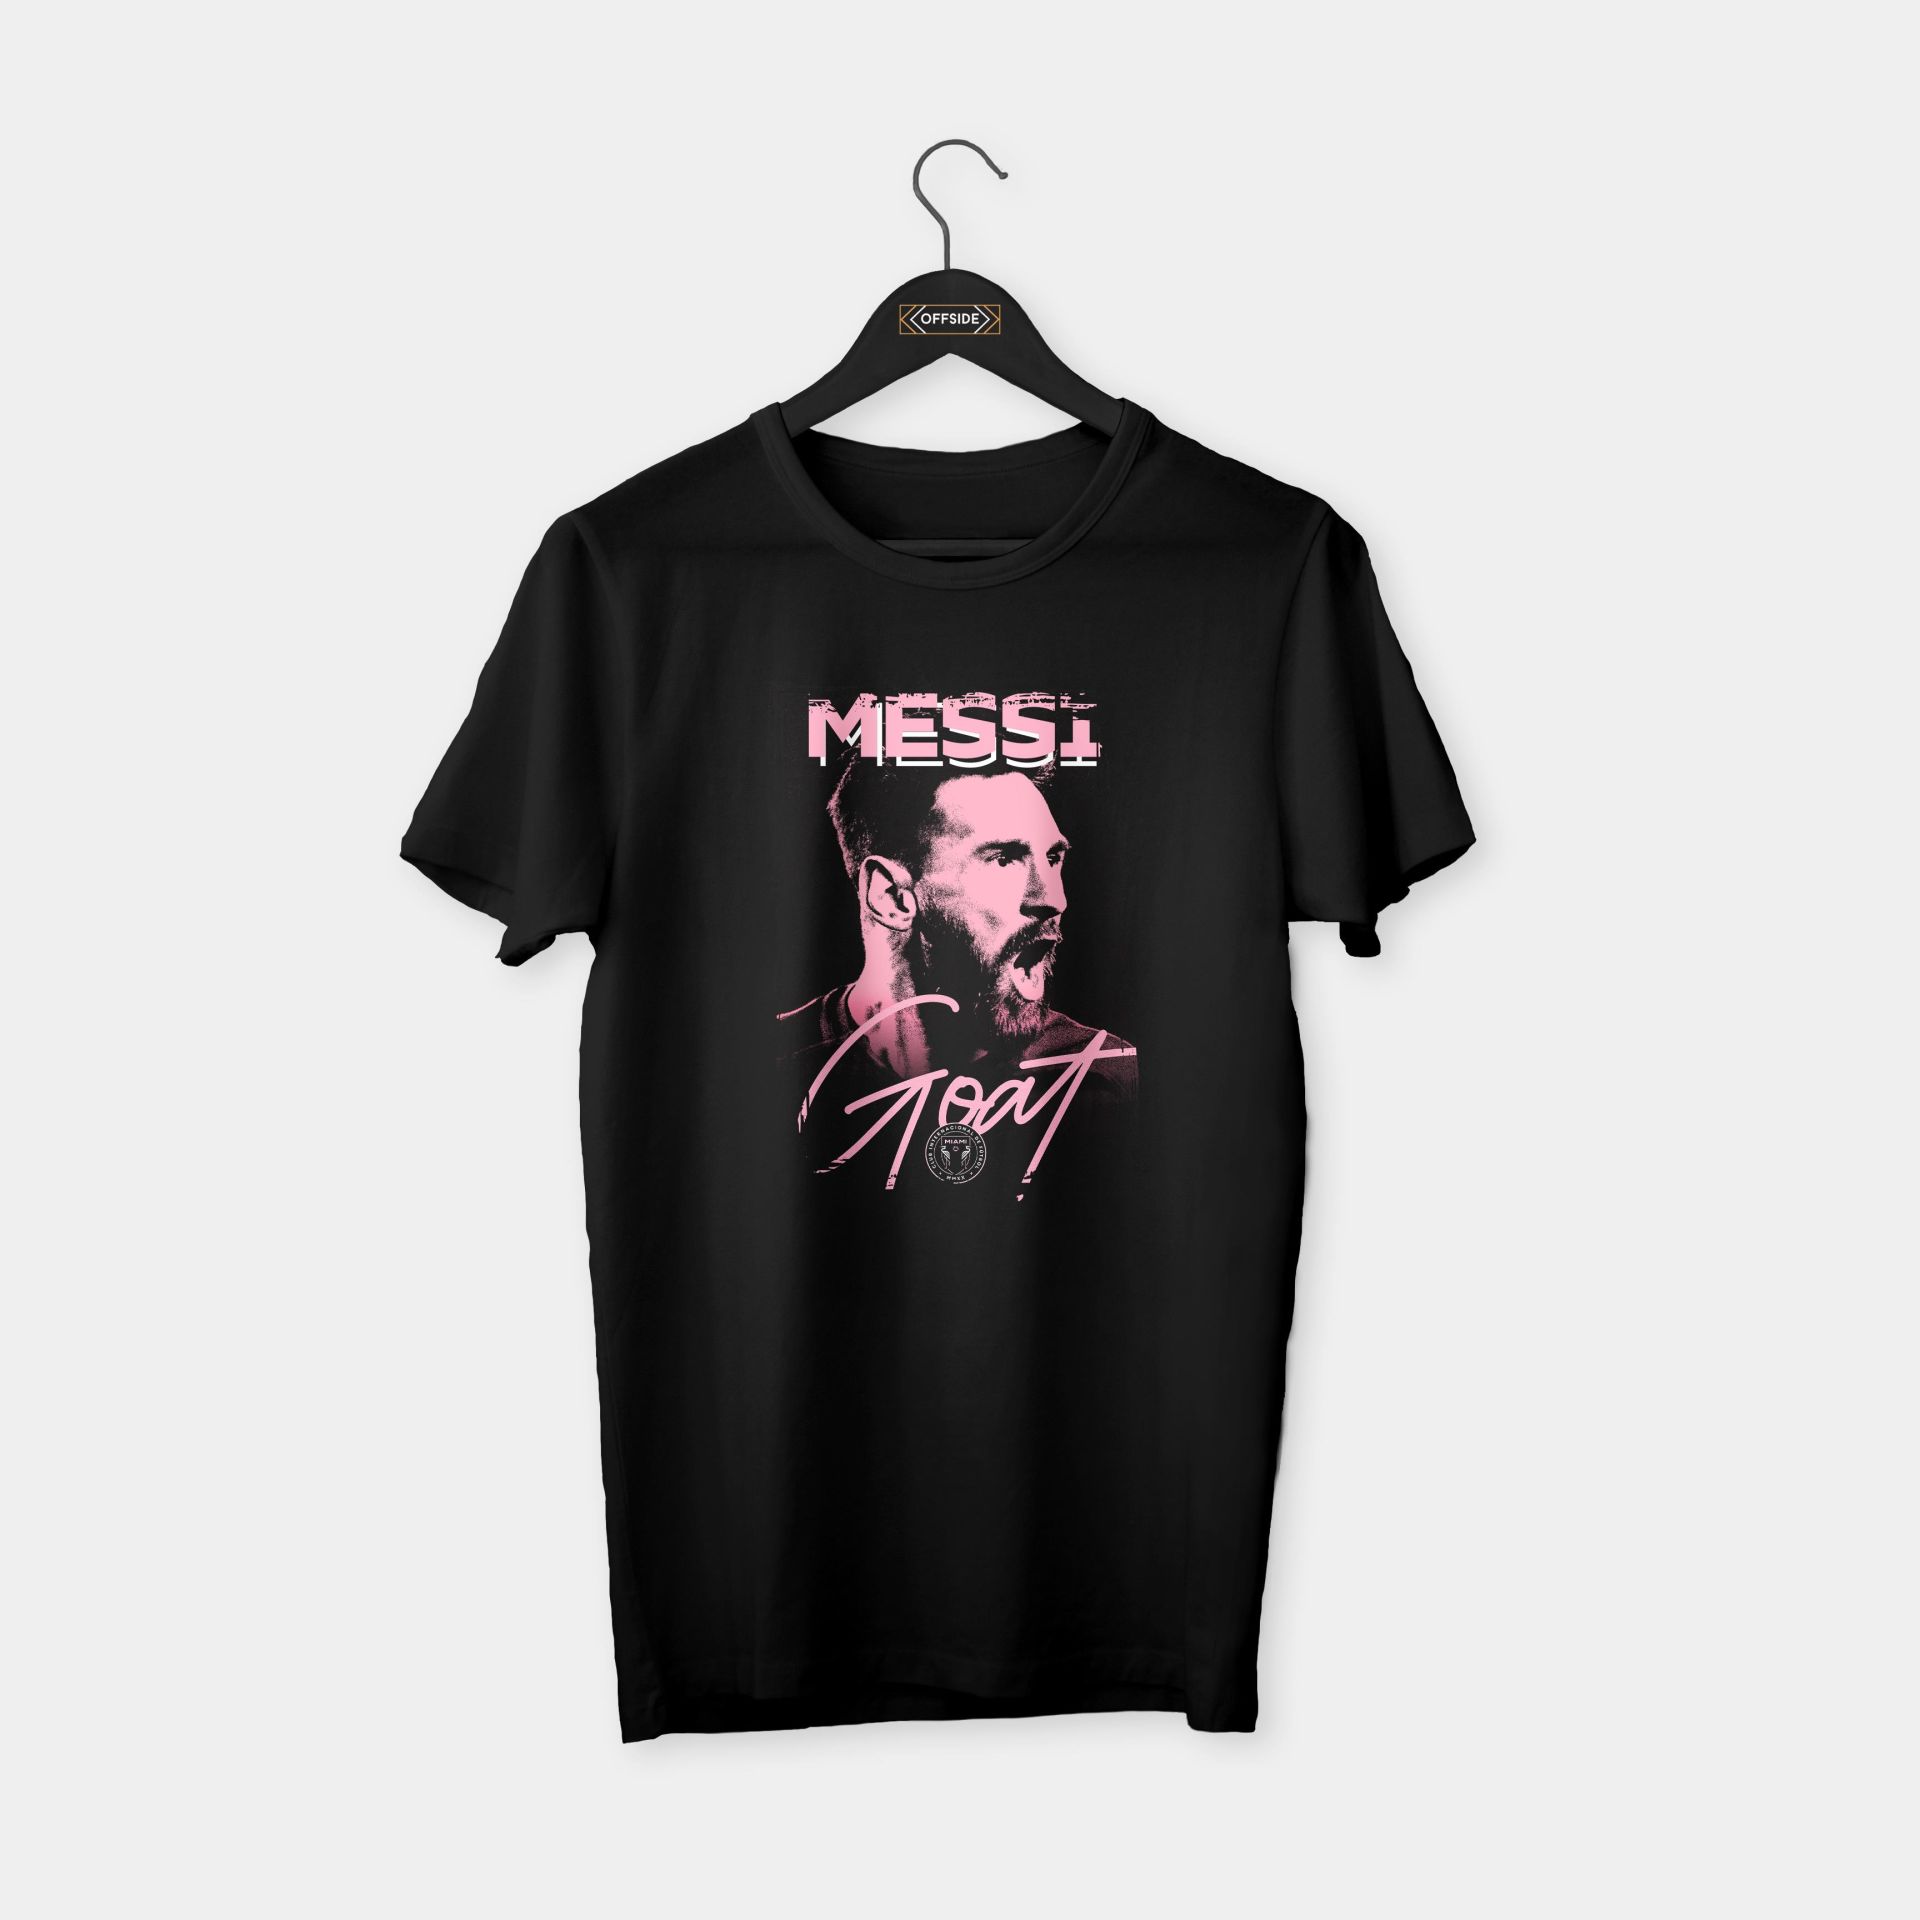 Lionel Messi 'Goat' T-shirt